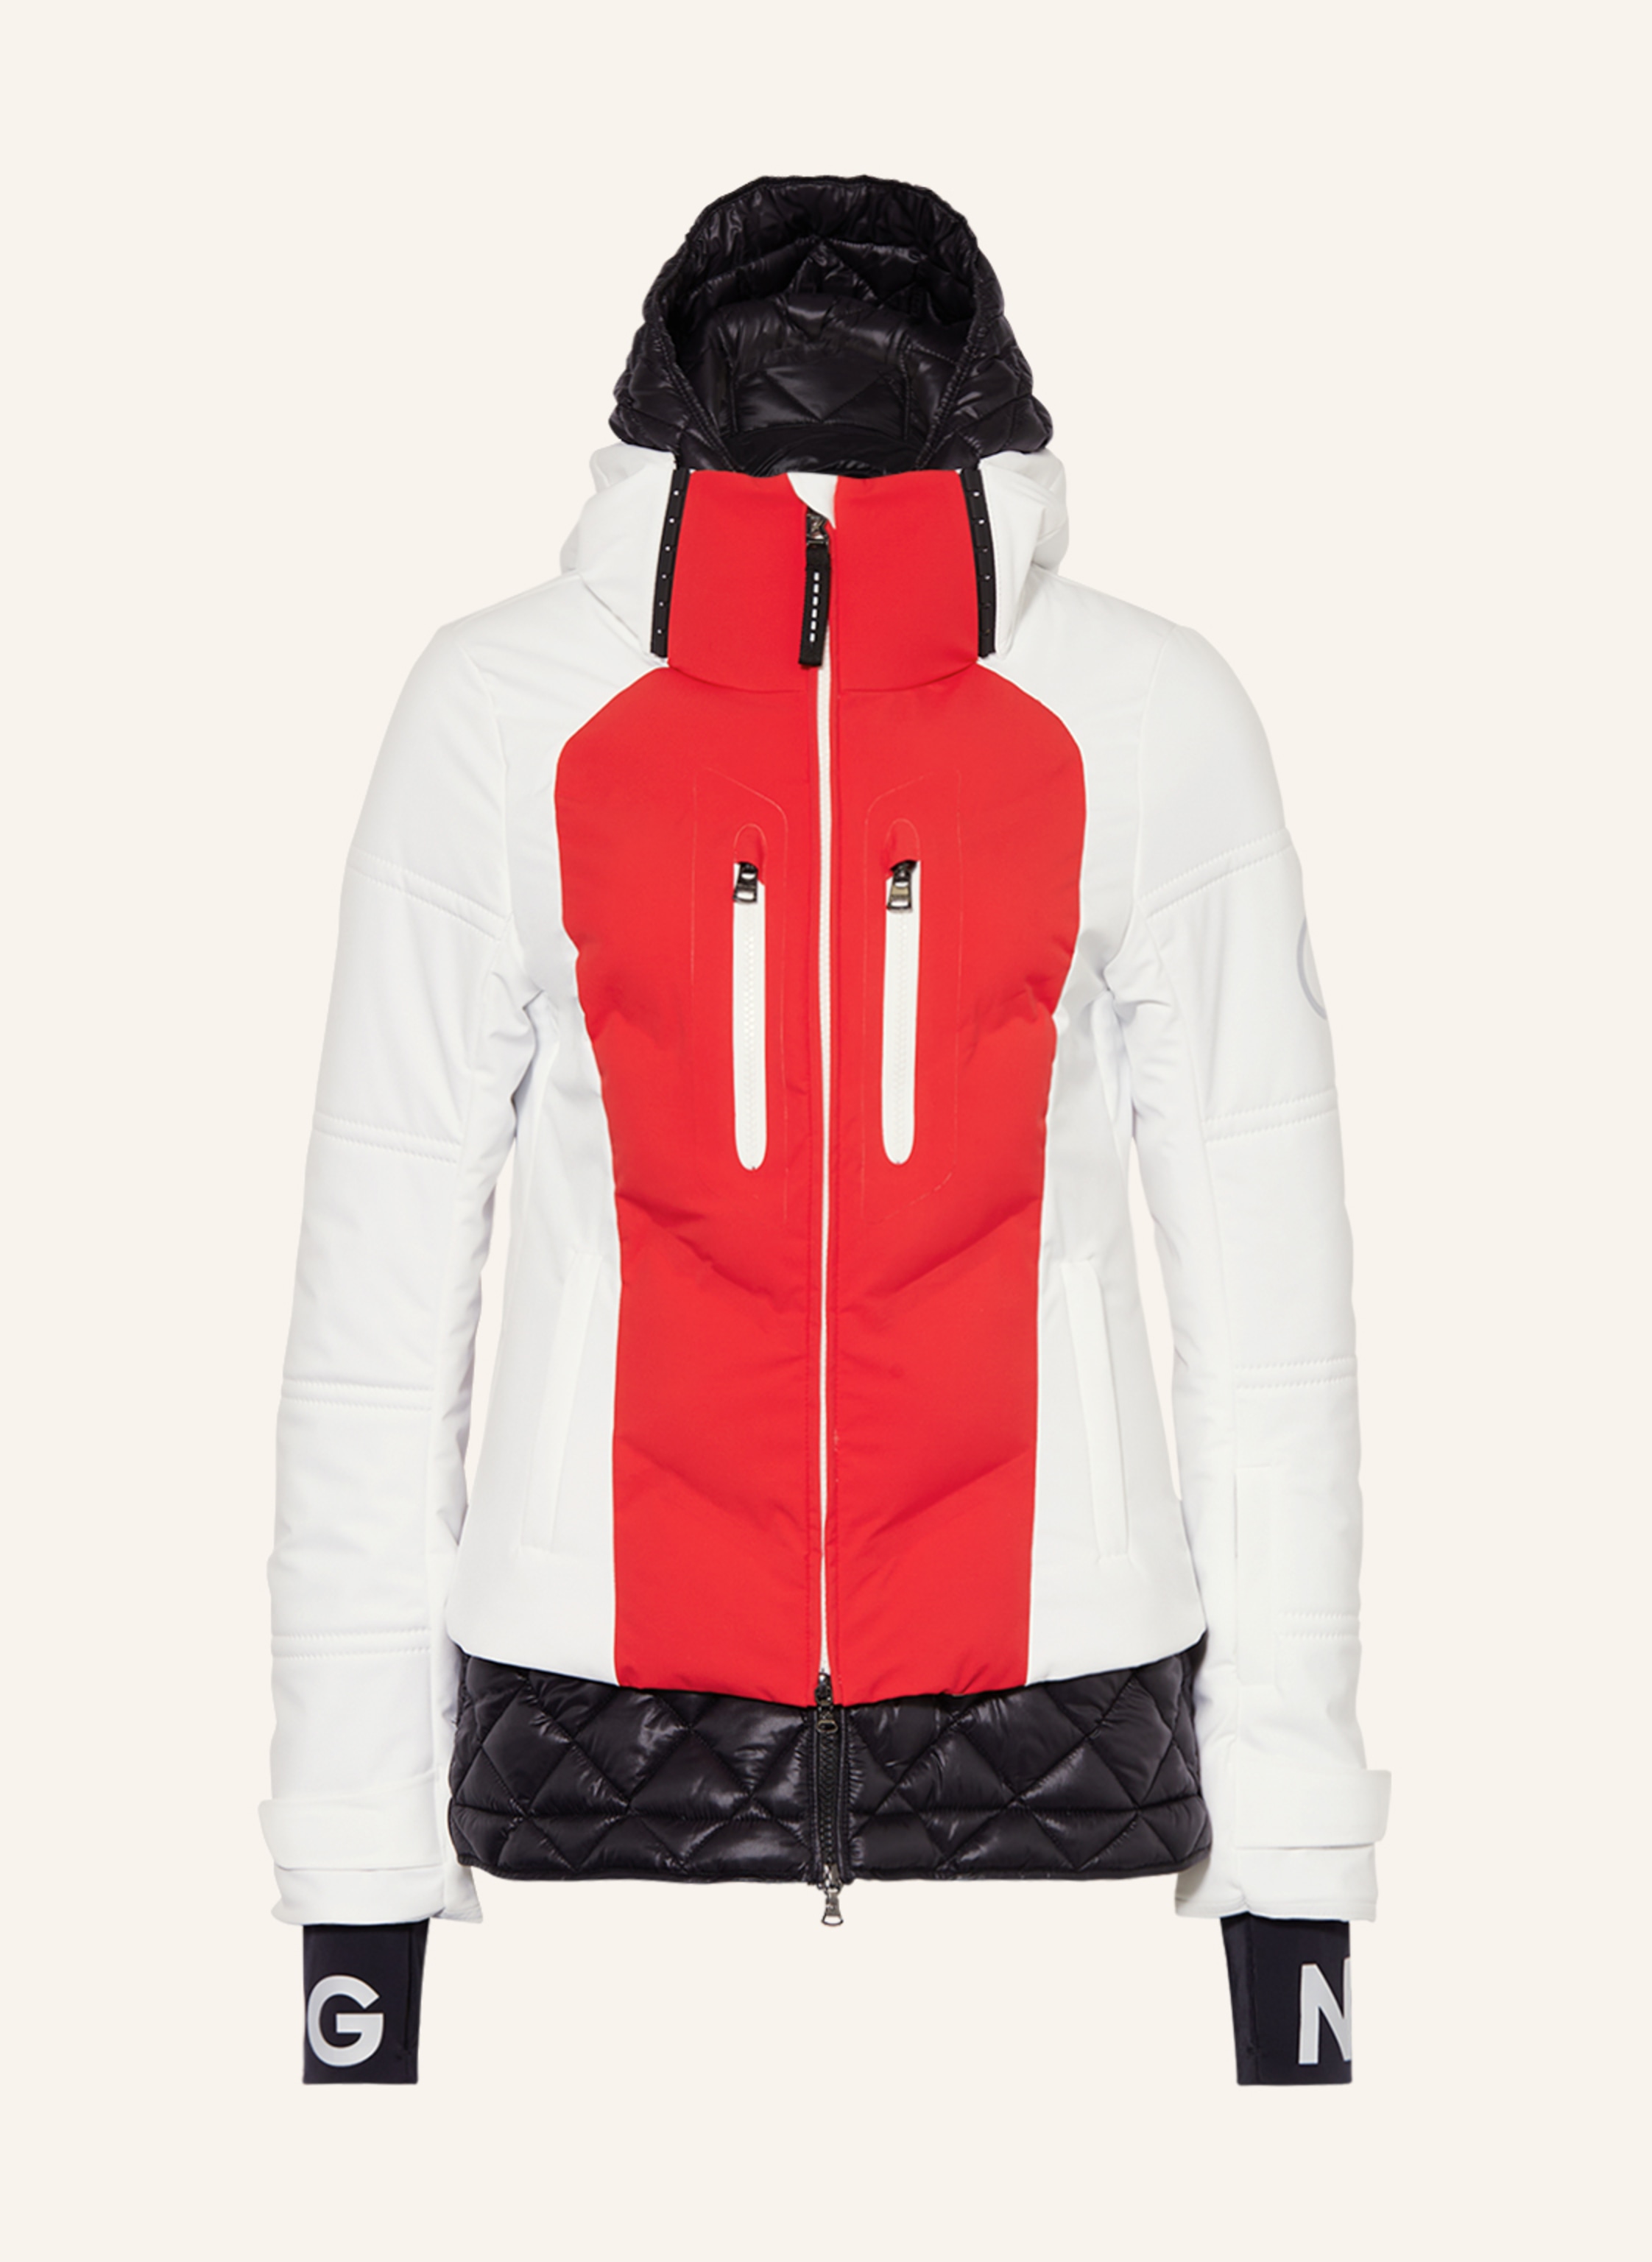 BOGNER Ski jacket MAELA in red/ white/ black